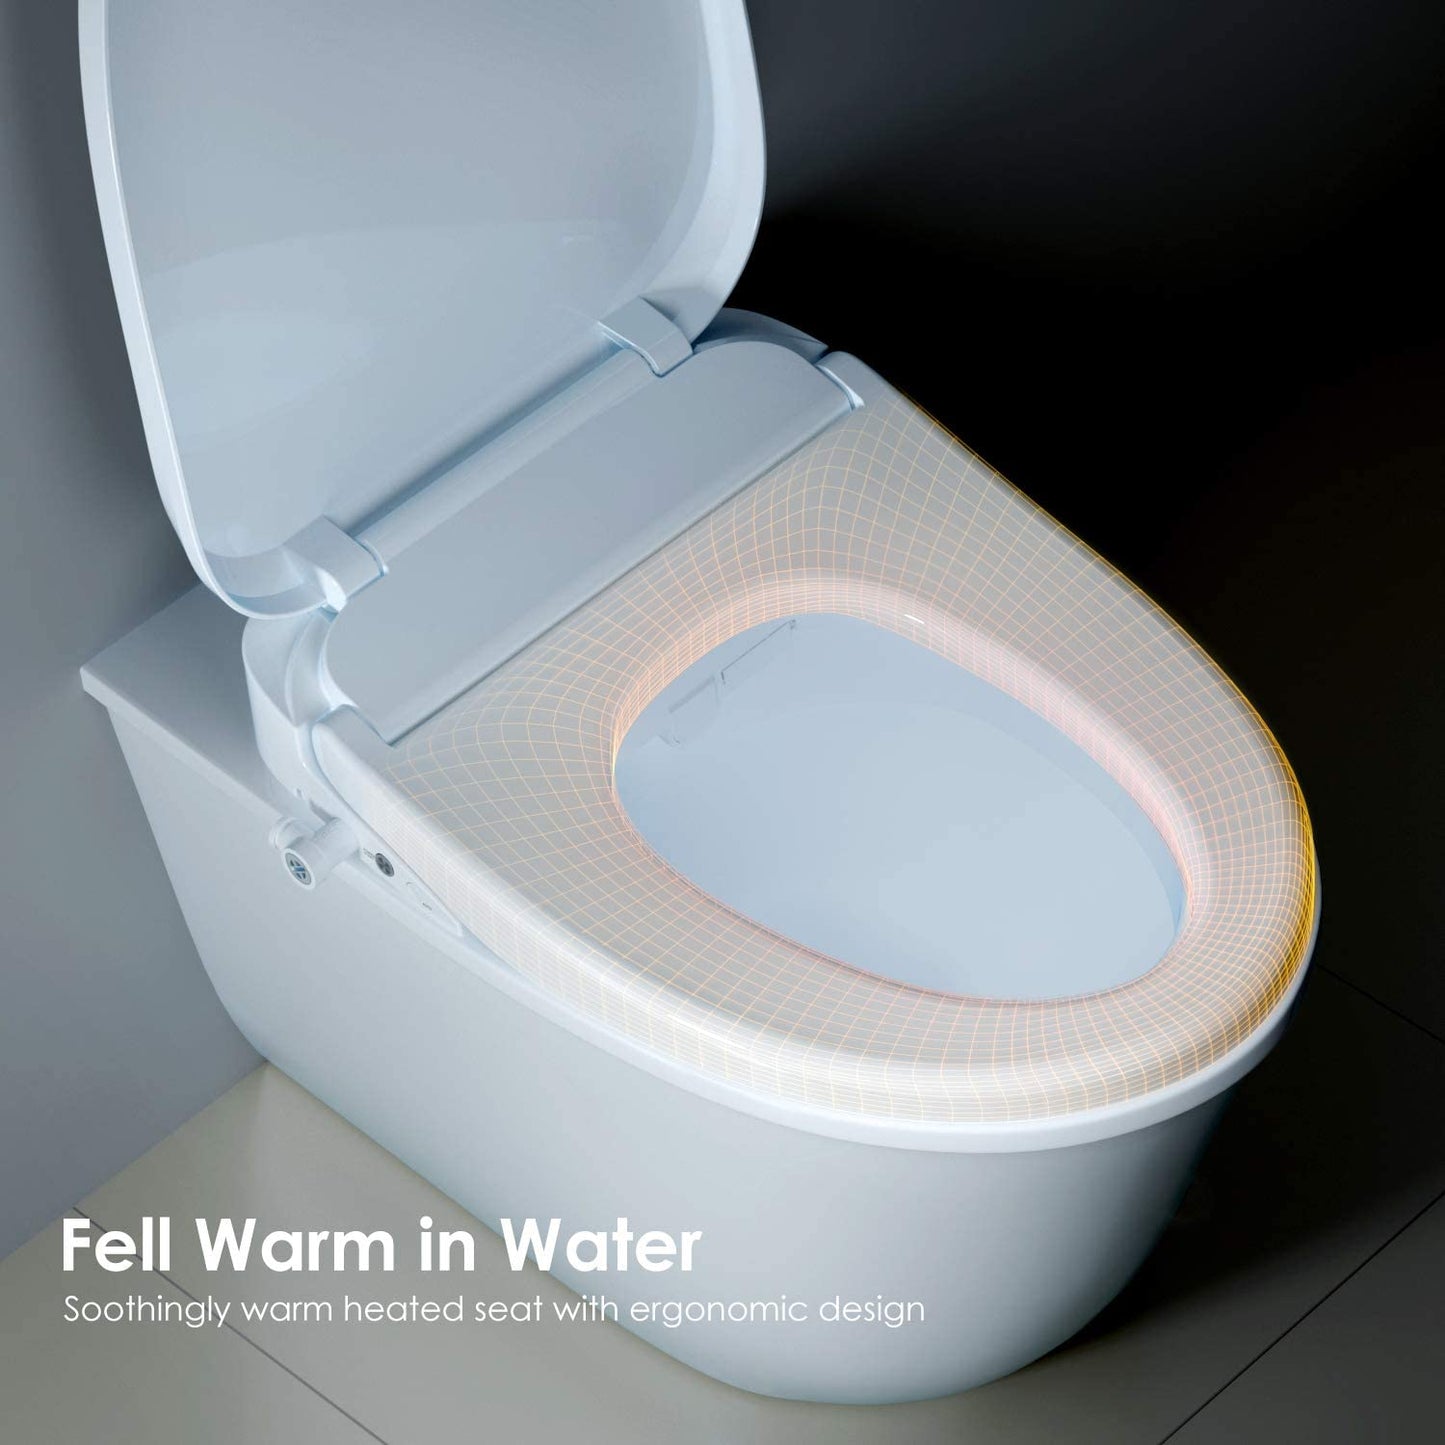 UFFU Smart Bidet Toilet Seat, Easy DIY Installation, Adjustable Heated Seat and Water with Air Dryer, Advanced H/C Massage, Nightlight, Remote Control